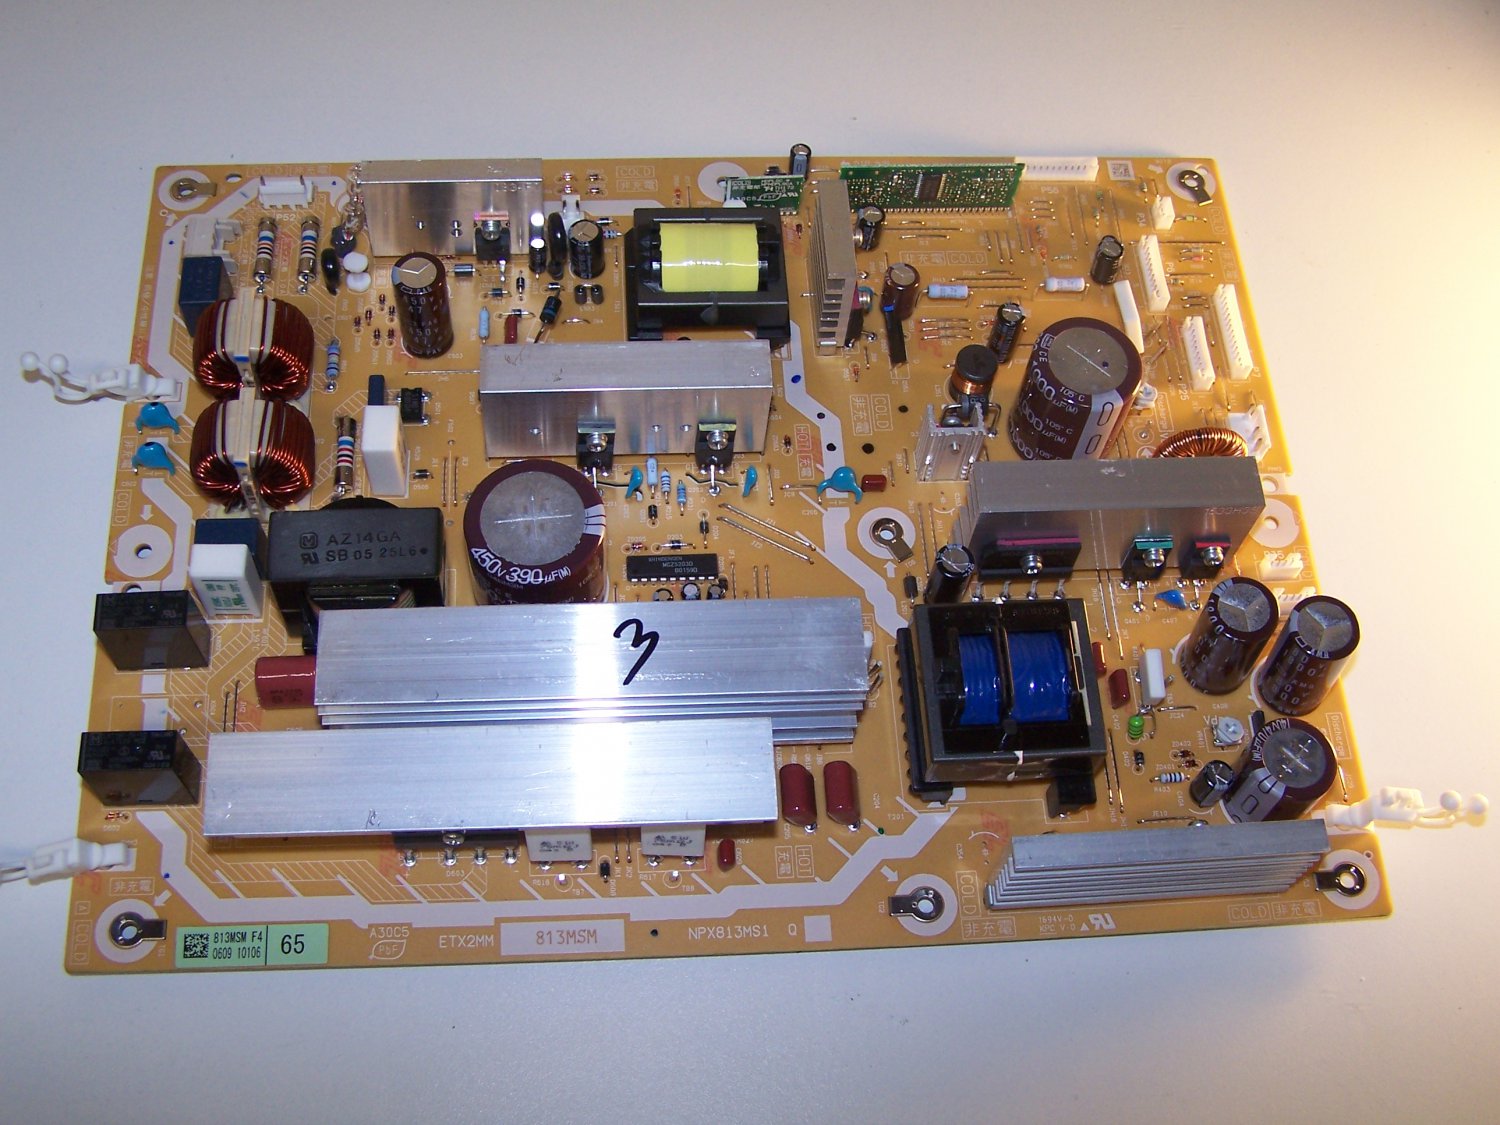 NPX813MS1:Panasonic ETX2MM813MSM Power Supply